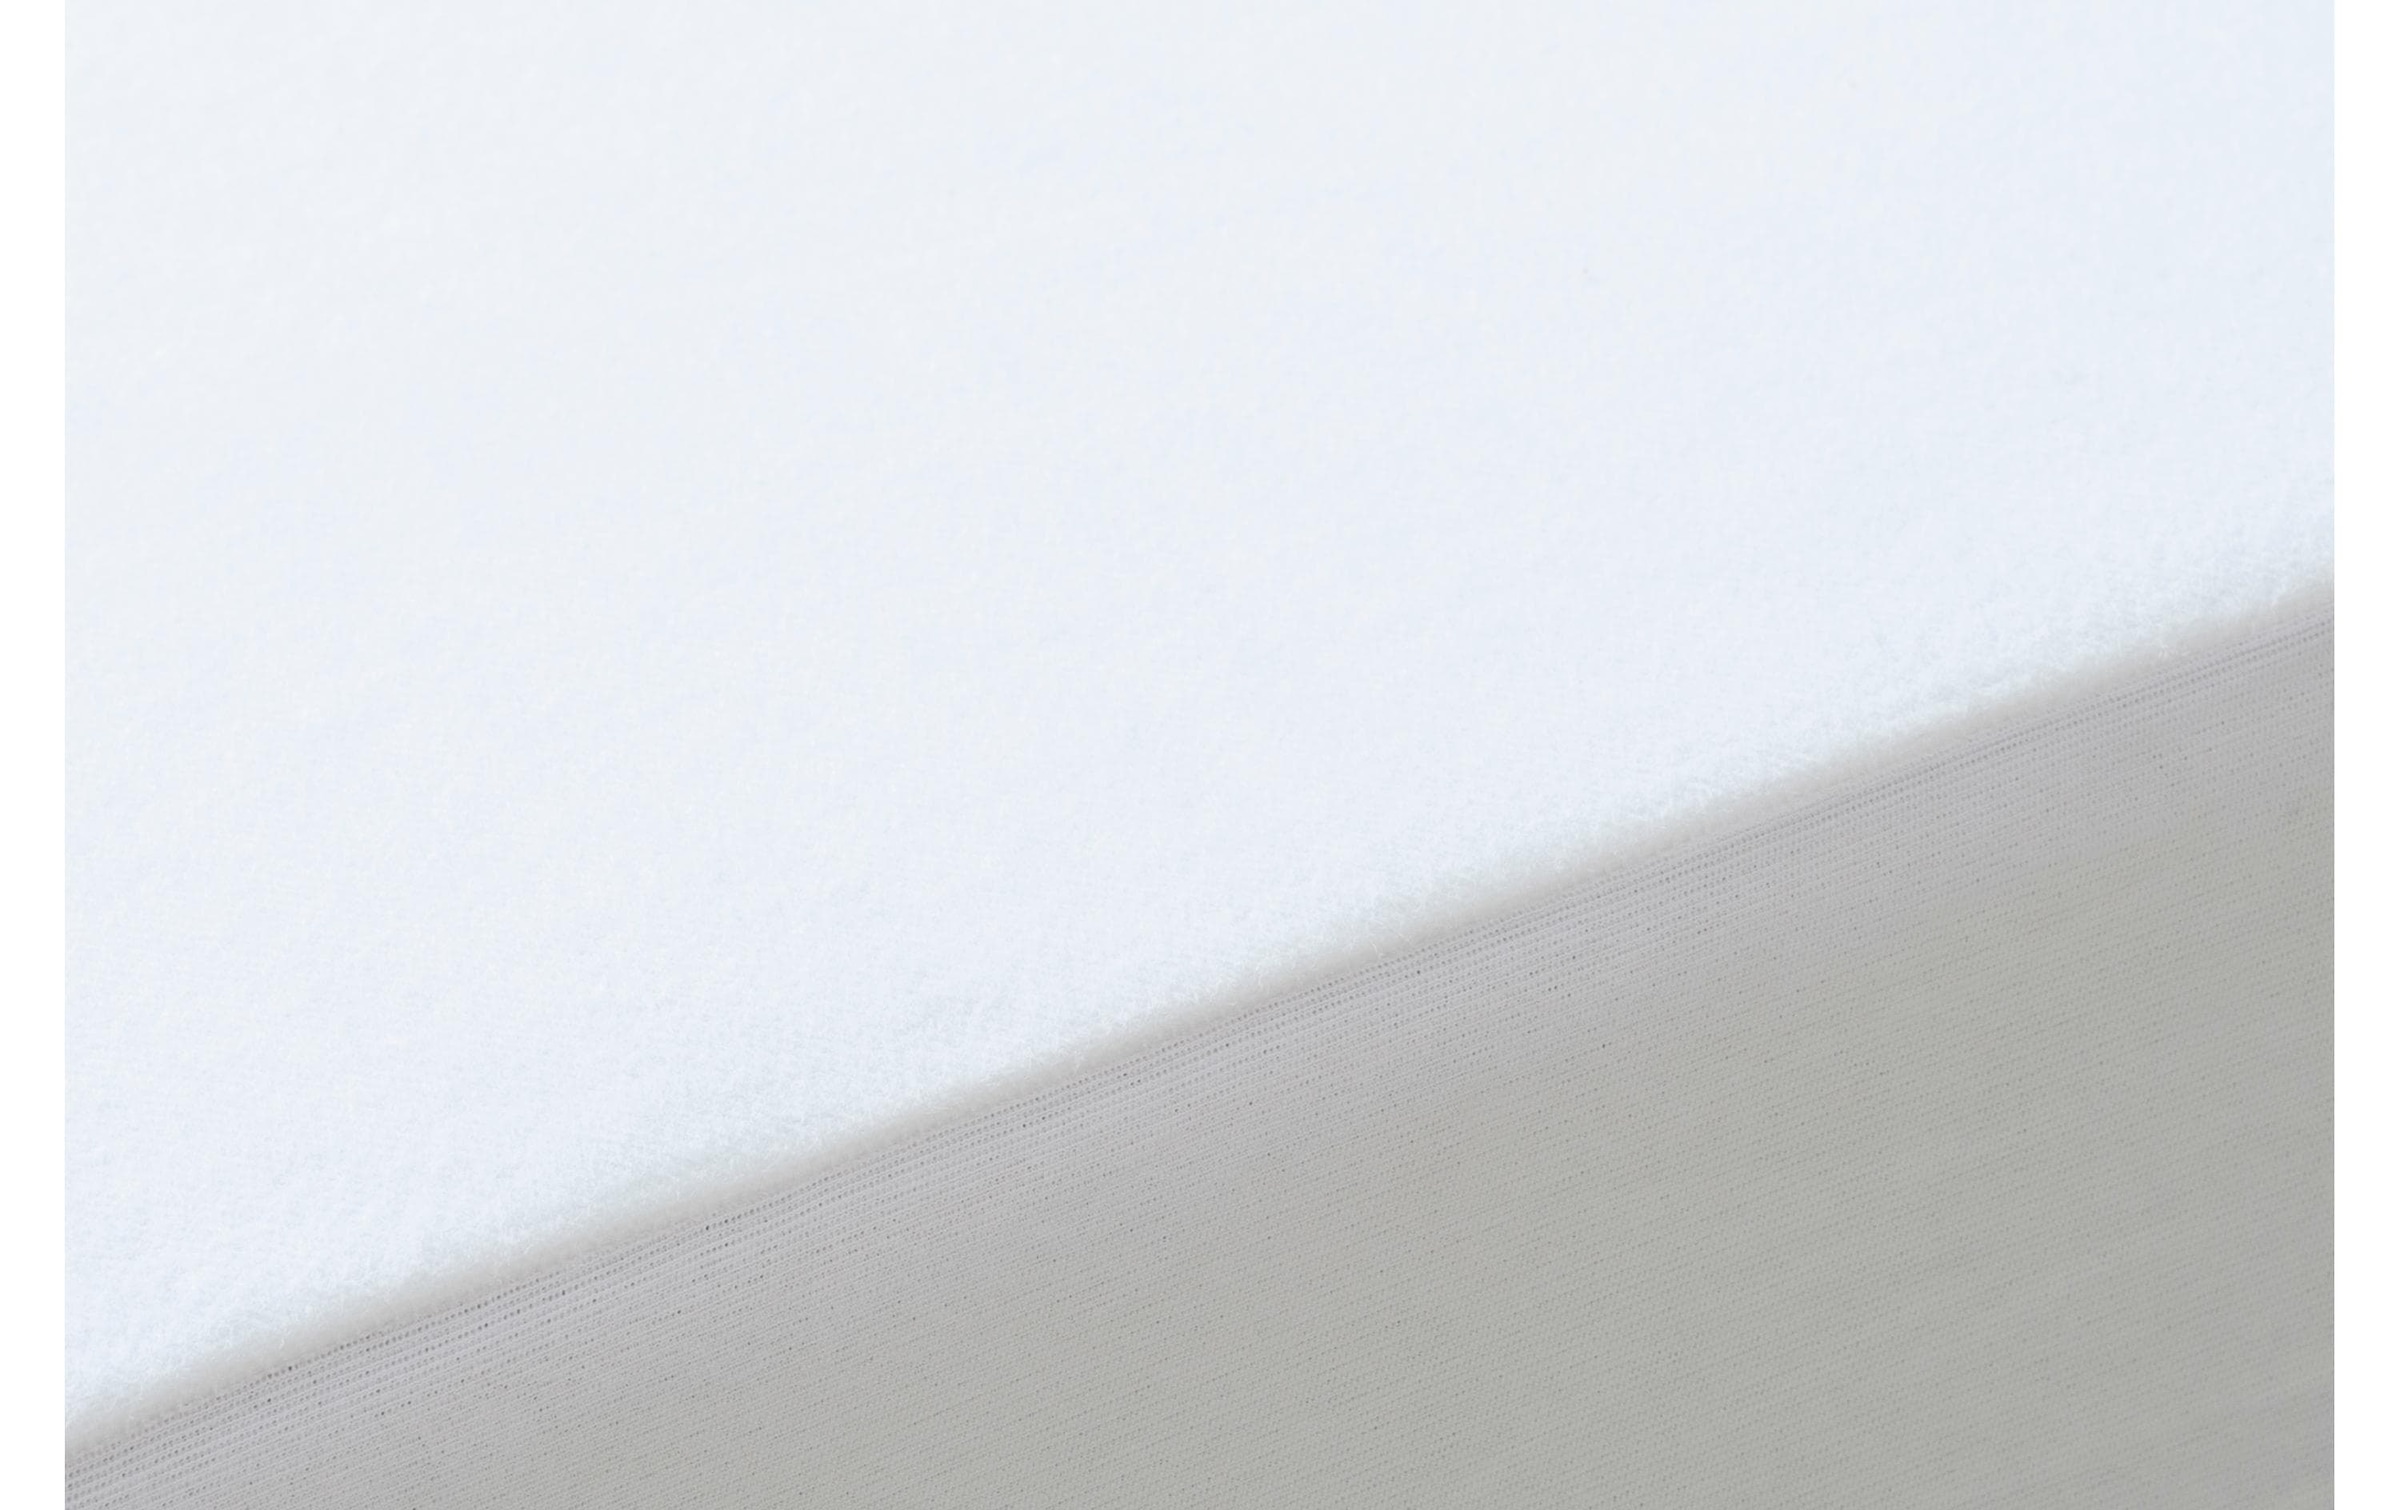 Matratzenschutzbezug »Velfont Eco Aqua 180 x 200 cm, Weiss«